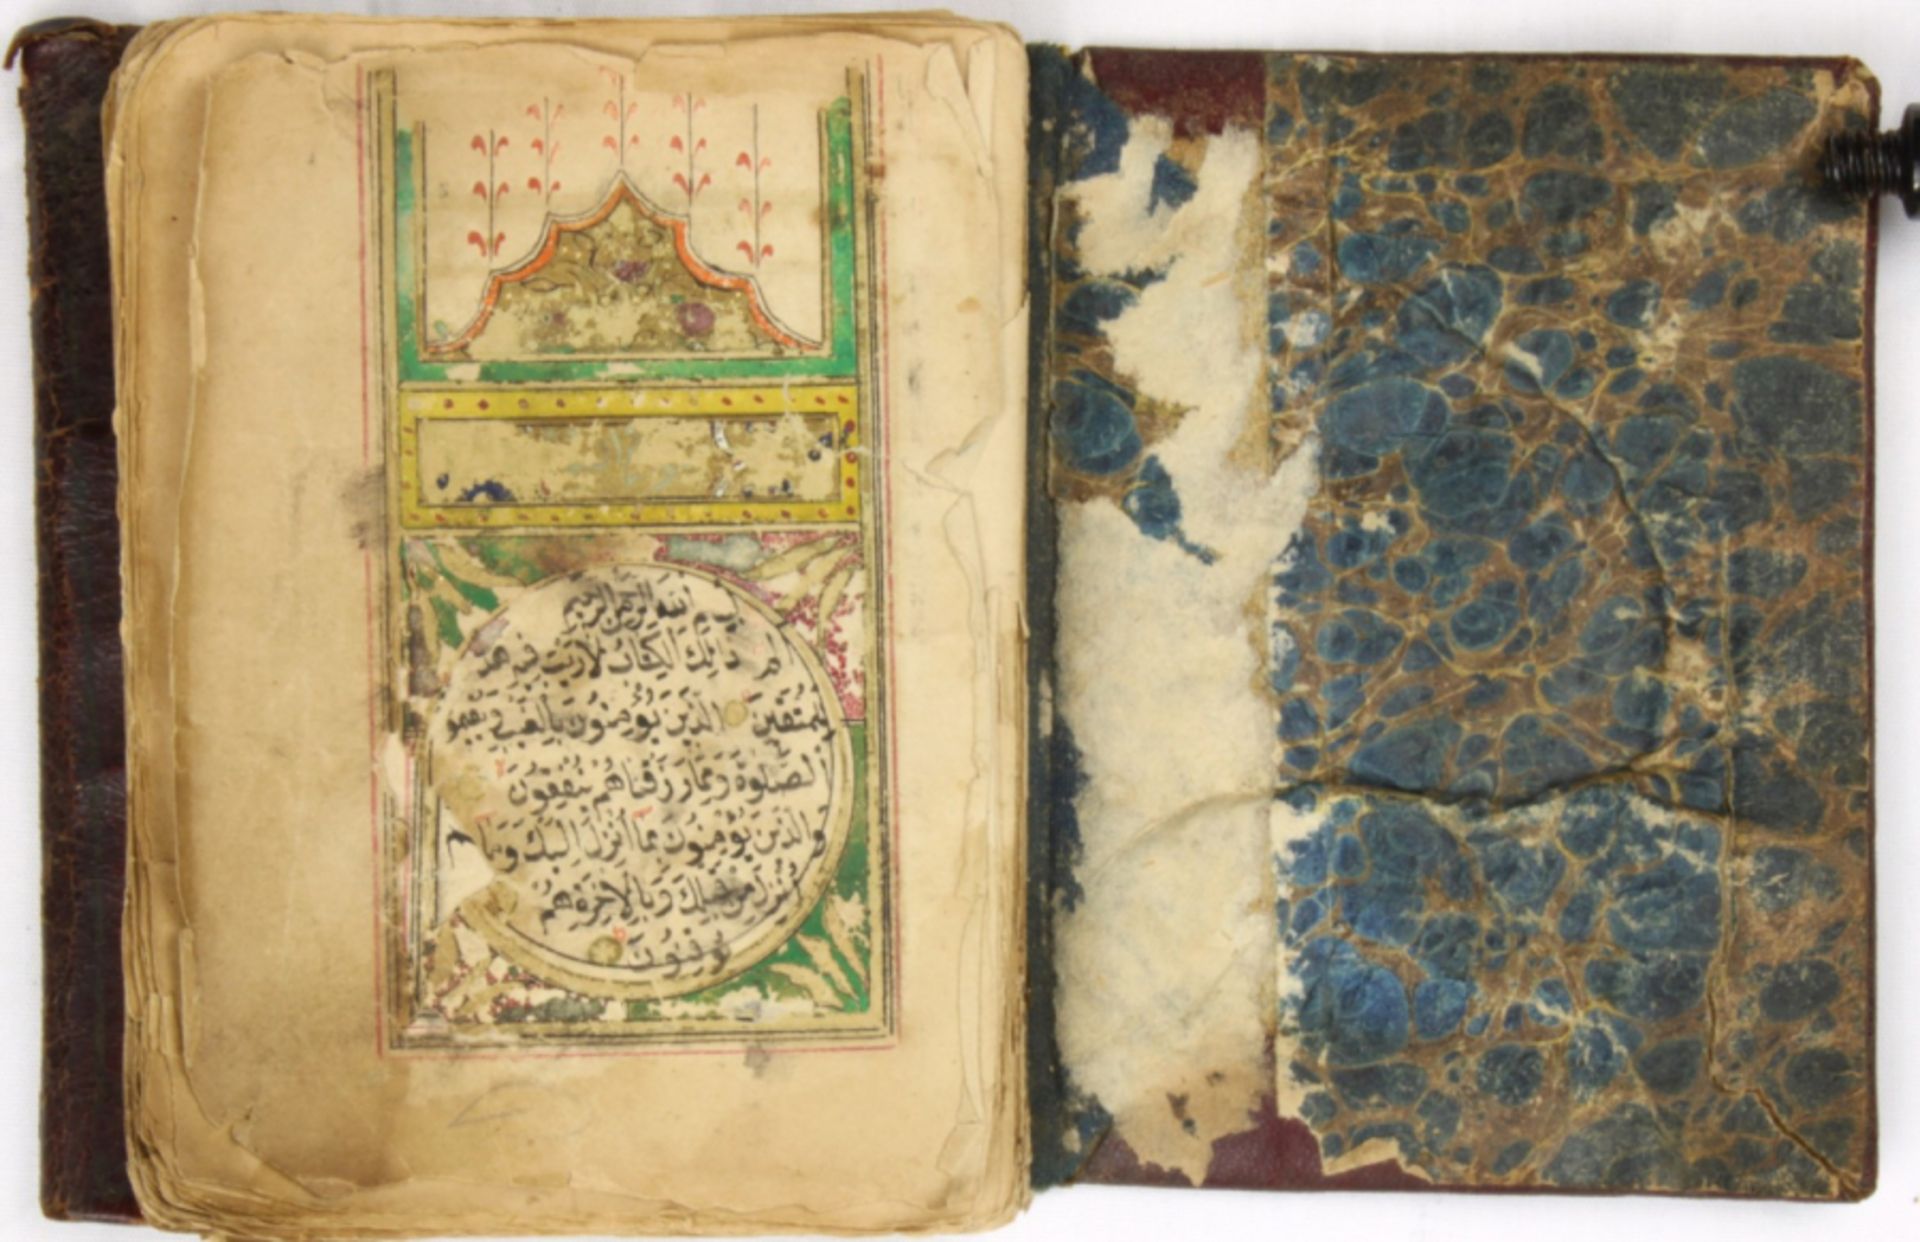 An 19th century handwritten Dalil al-Khairat